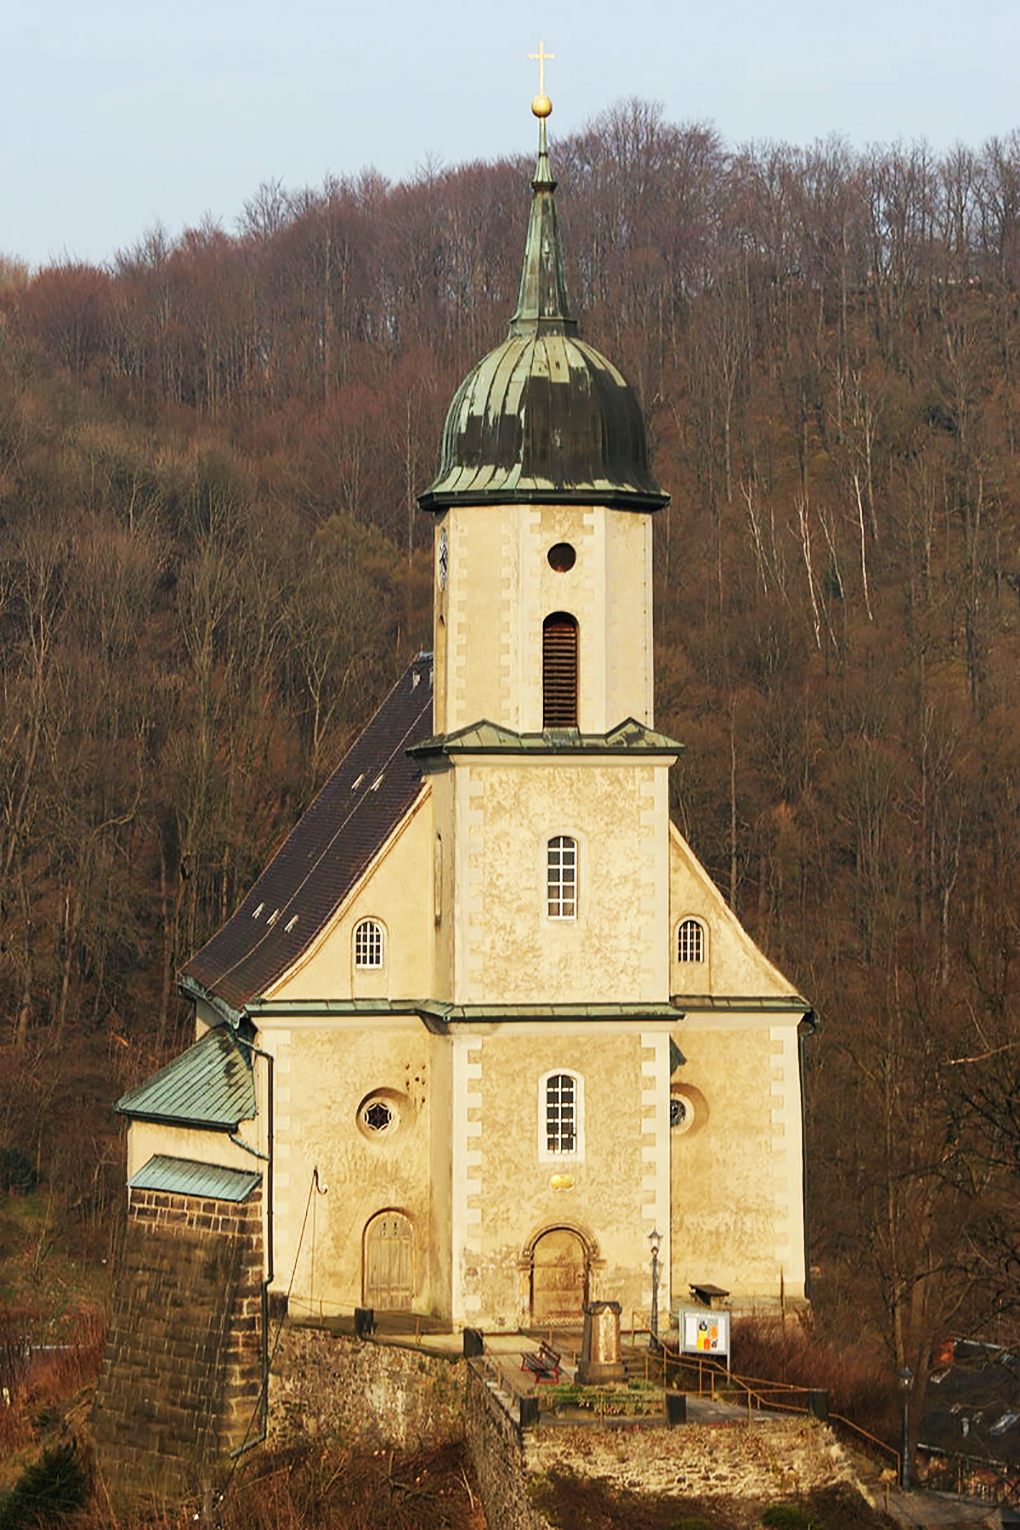 Tharandt, kościół, fot. M.J., https://commons.wikimedia.org/w/index.php?curid=3355307 – dostęp 27.04.2020